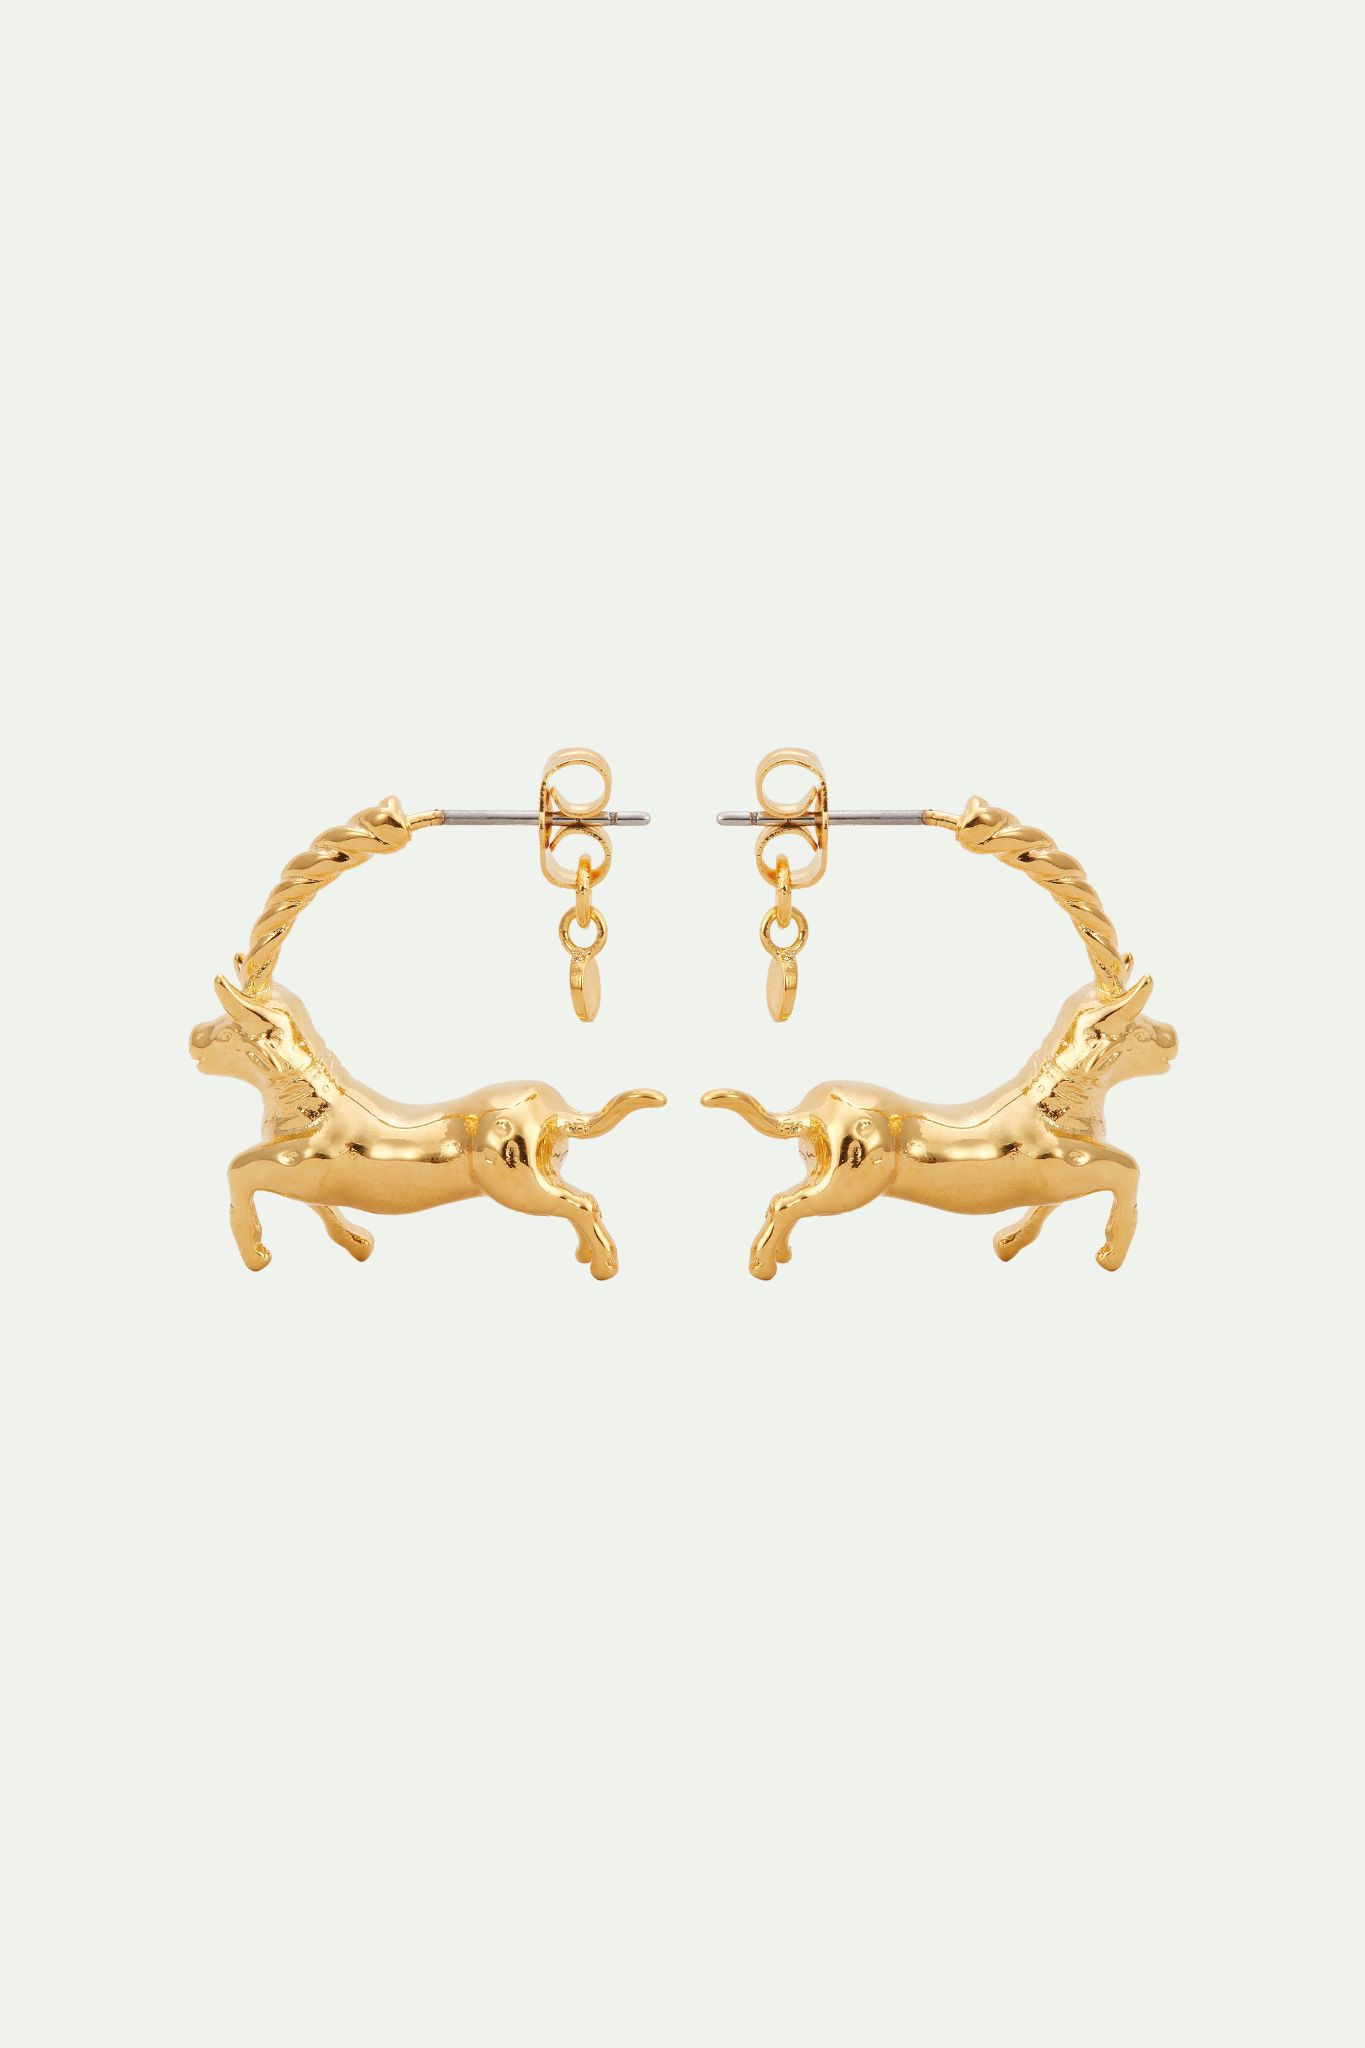 Taurus zodiac sign hoops earrings